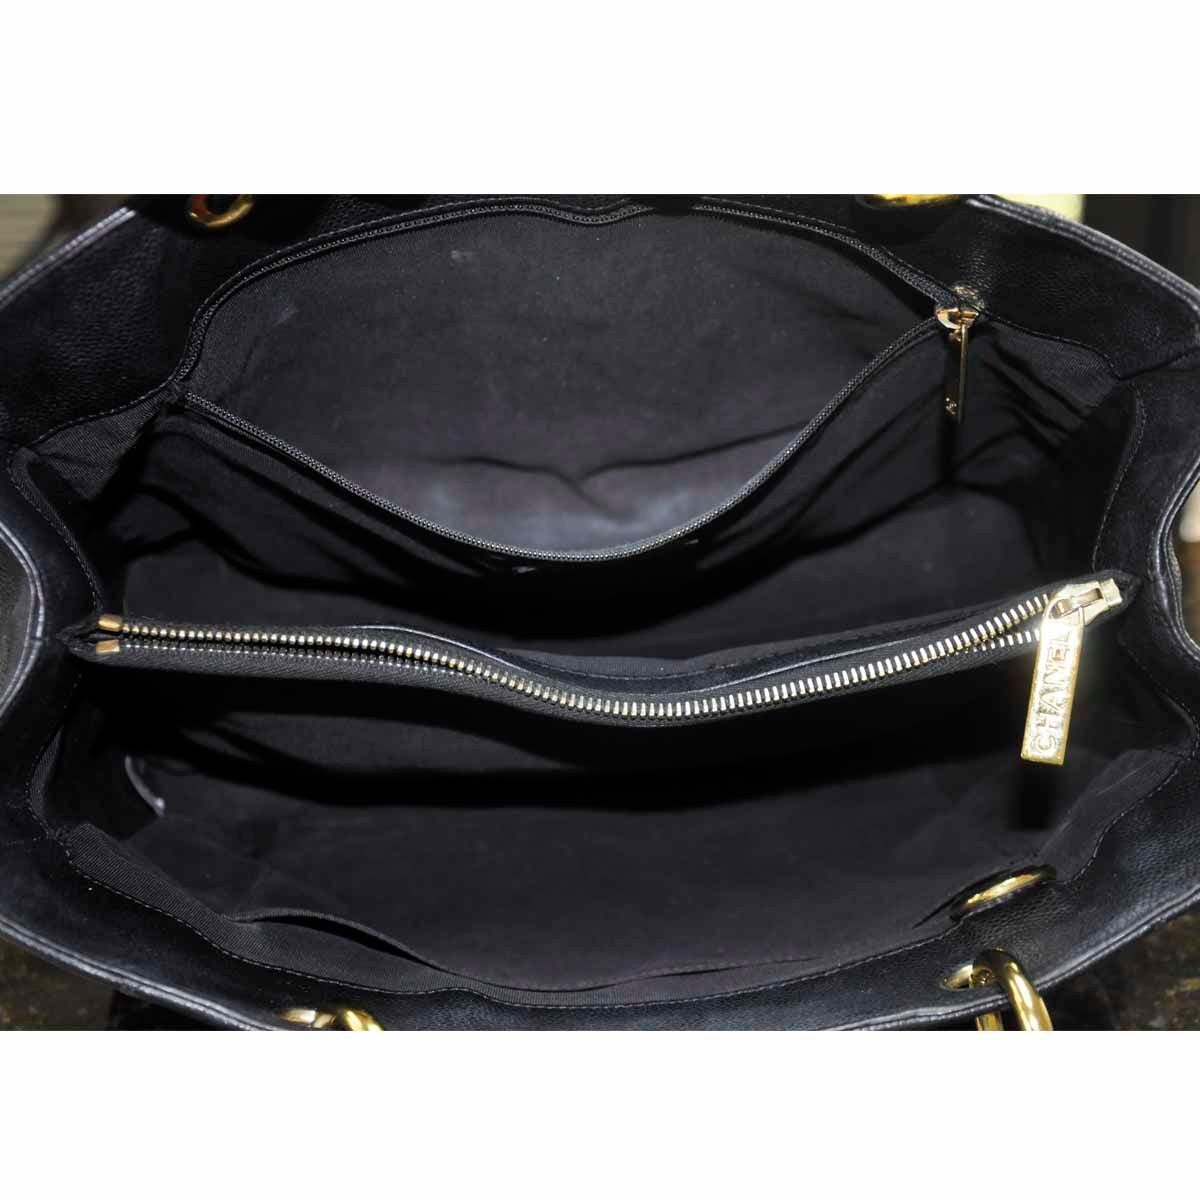 Chanel Grand Shopper Tote GST Black Leather Handbag 3